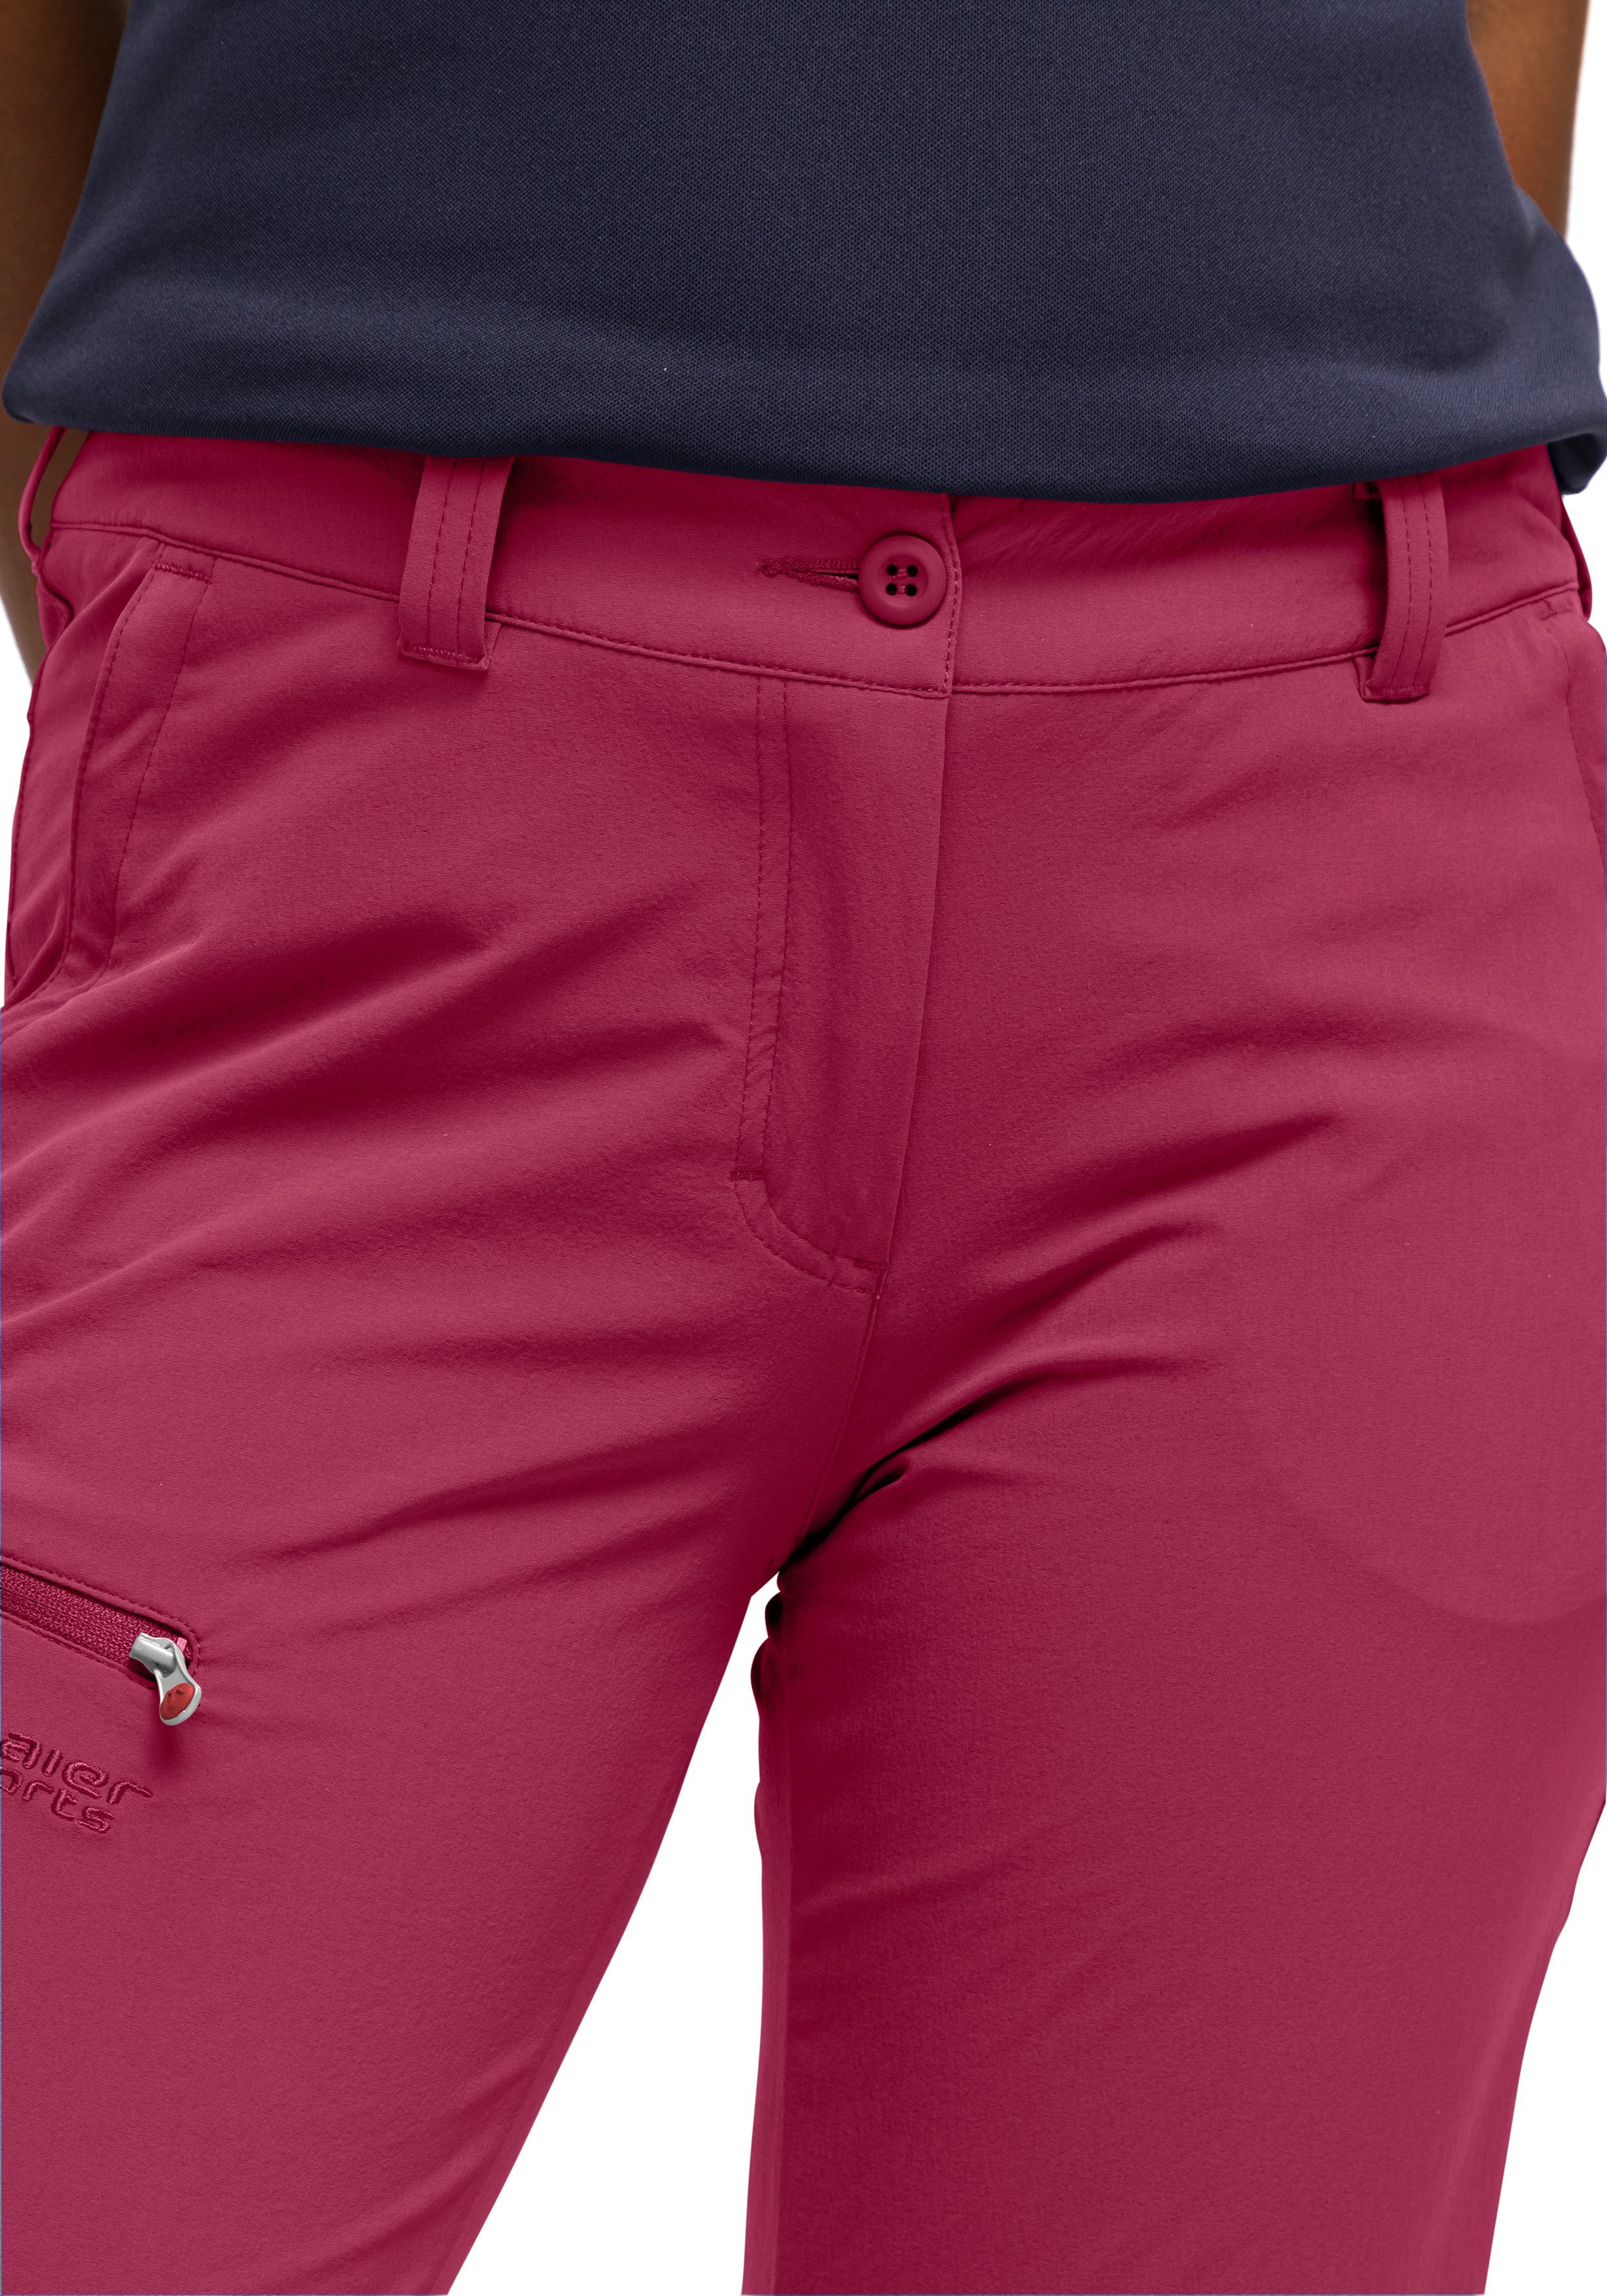 Inara purpurrot Funktionshose Sports aus Maier elastischem Wanderhose, Damen Material slim Outdoor-Hose